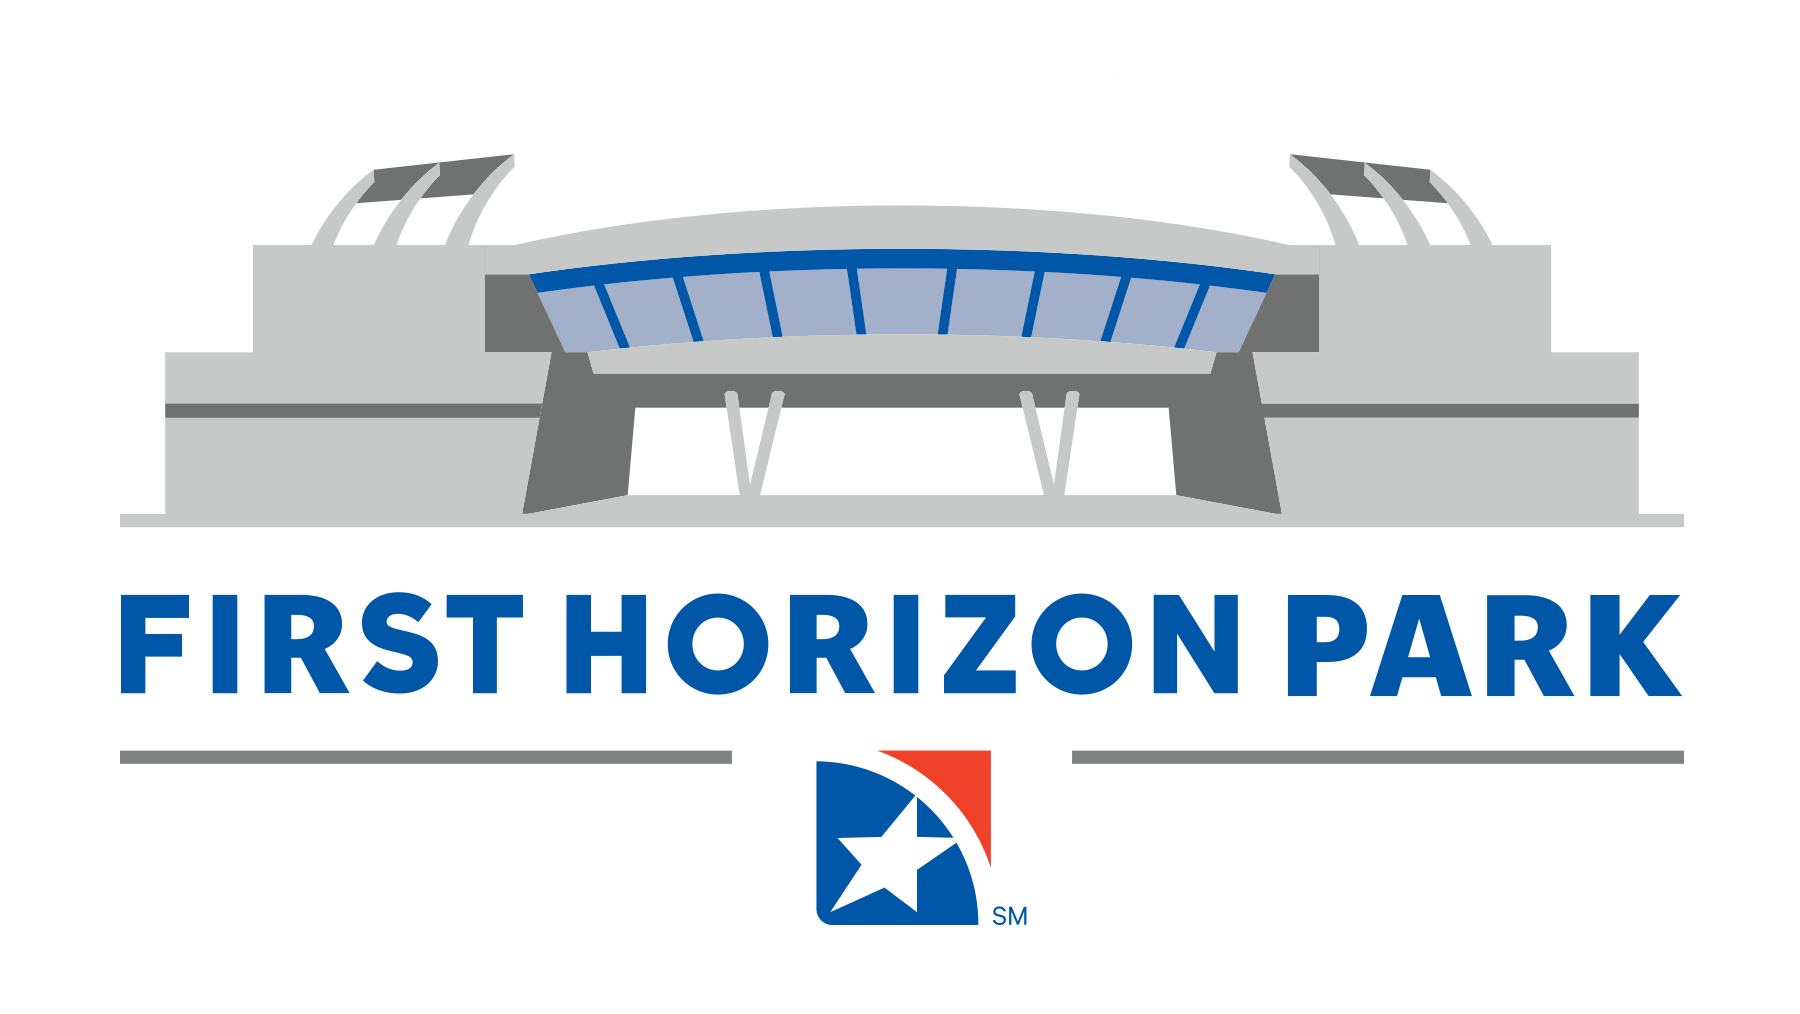 First Horizon Park